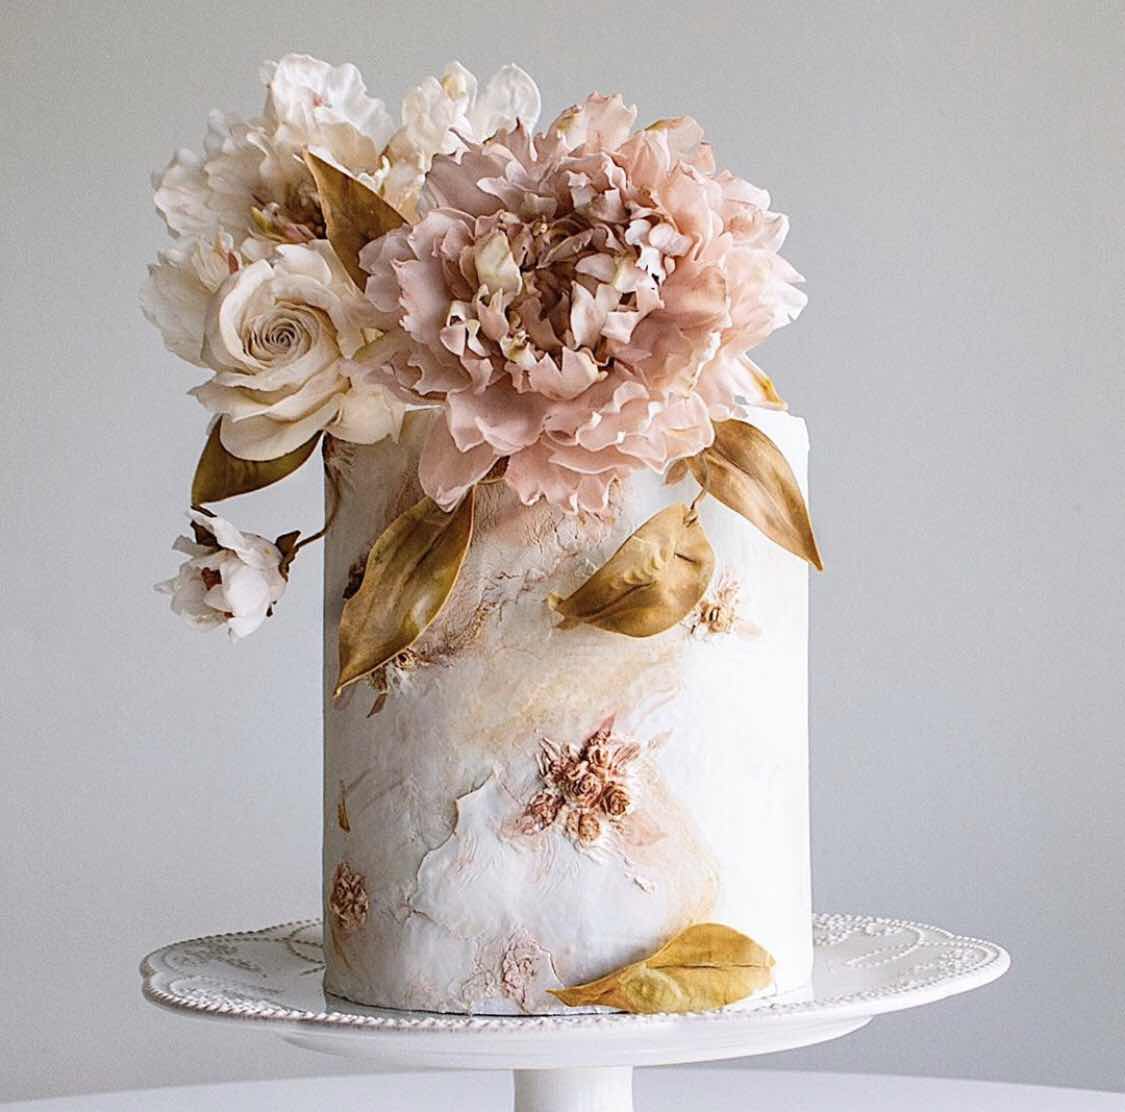 Magical Cake Designs by Cynthia Irani Design